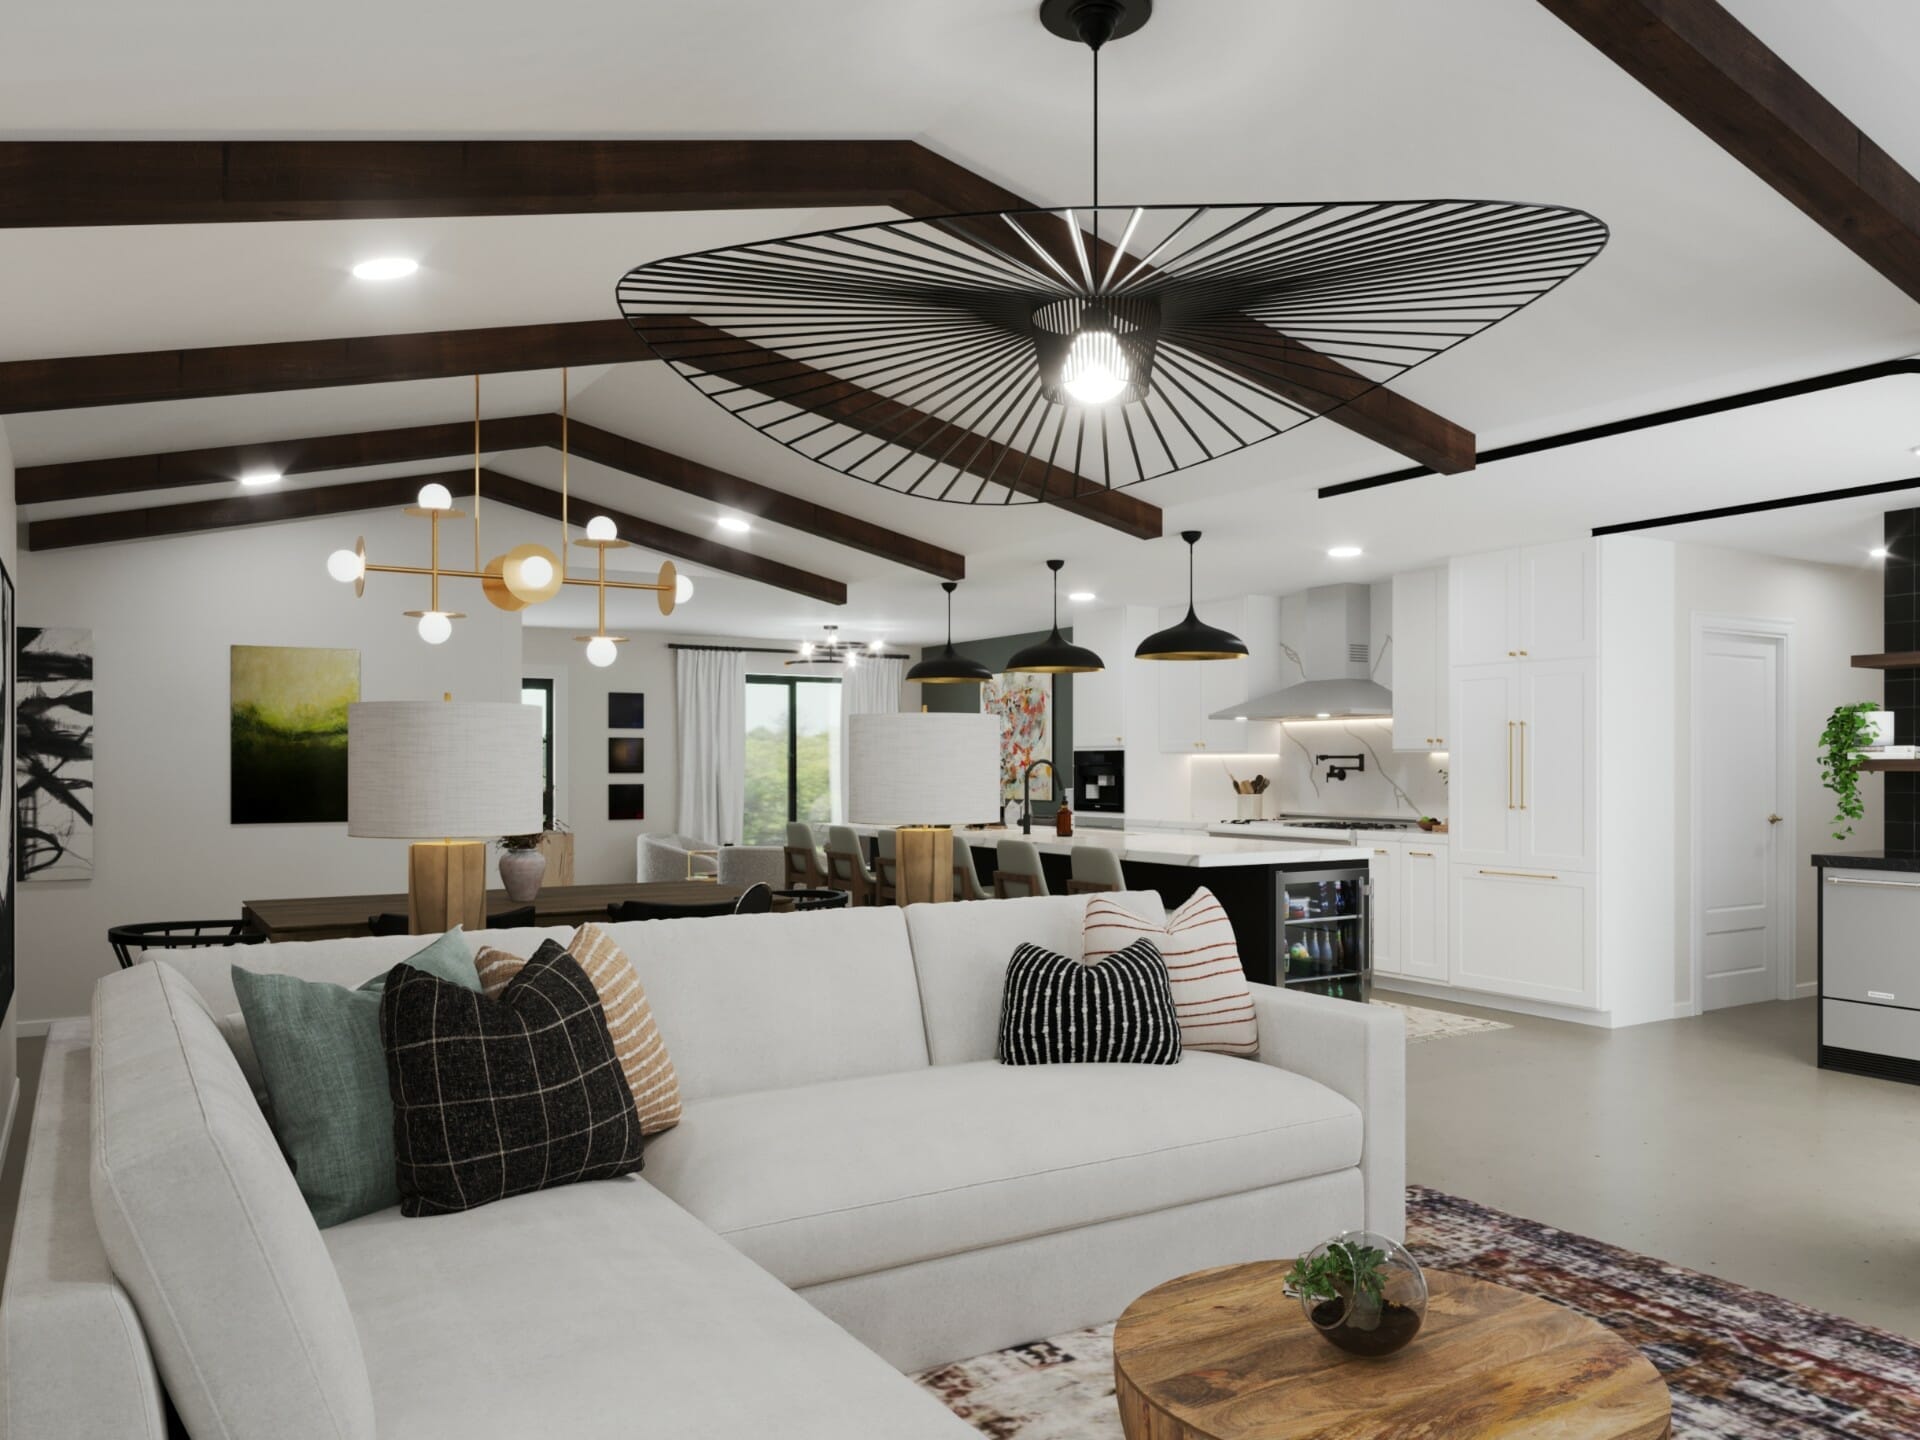 Split Oak Coach and Living Room — Interior Design Project in San Francisco Bay Area